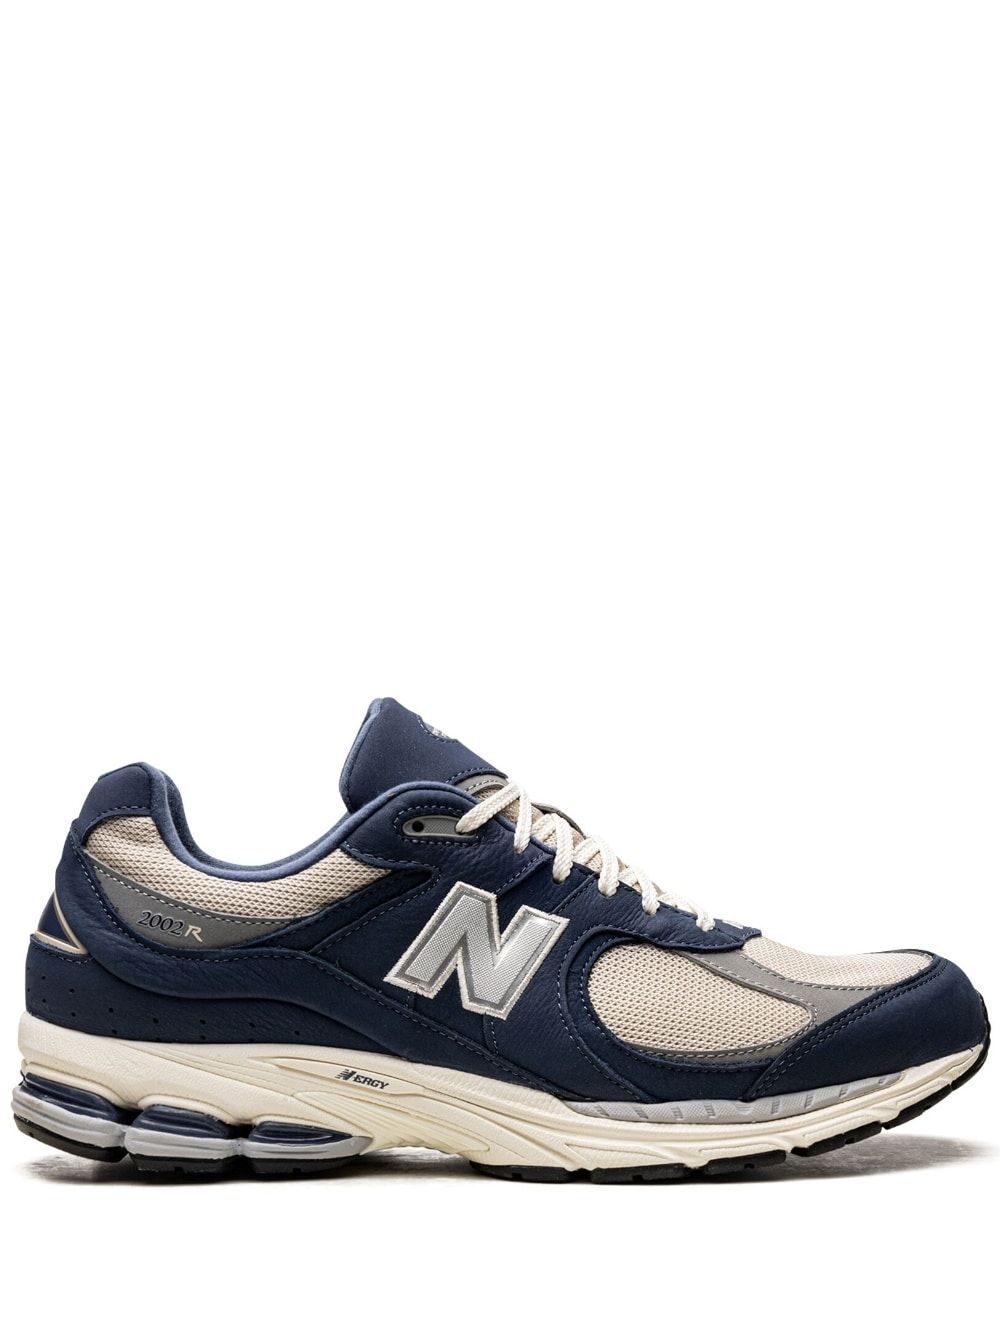 New Balance 2002R "Vintage Indigo" sneakers - Blue